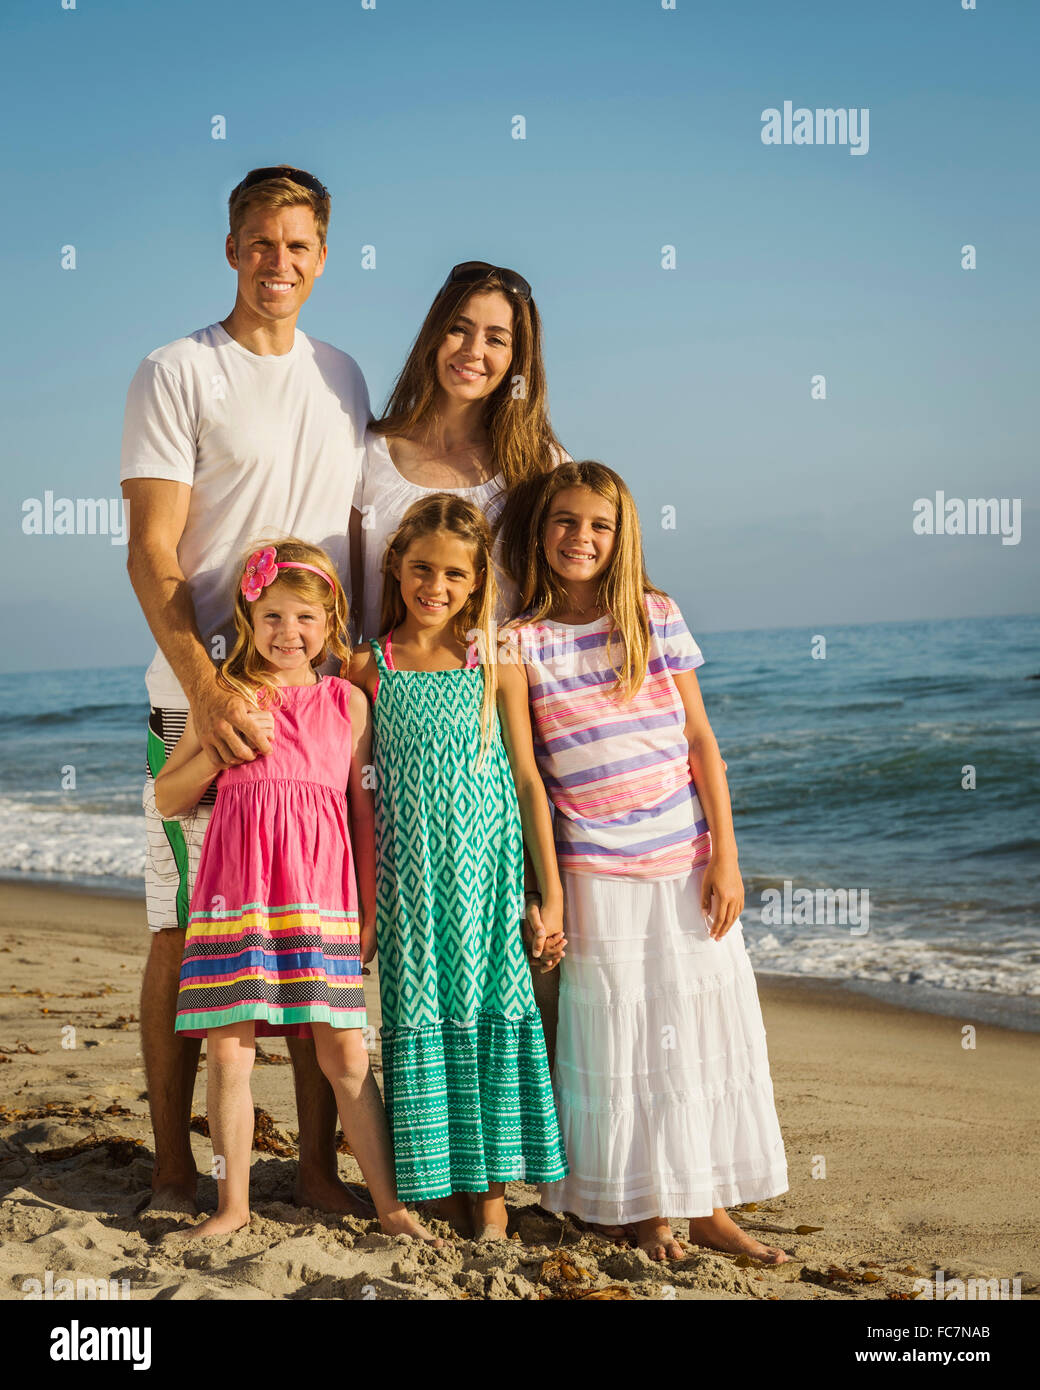 Caucasian family smiling on beach Stock Photo